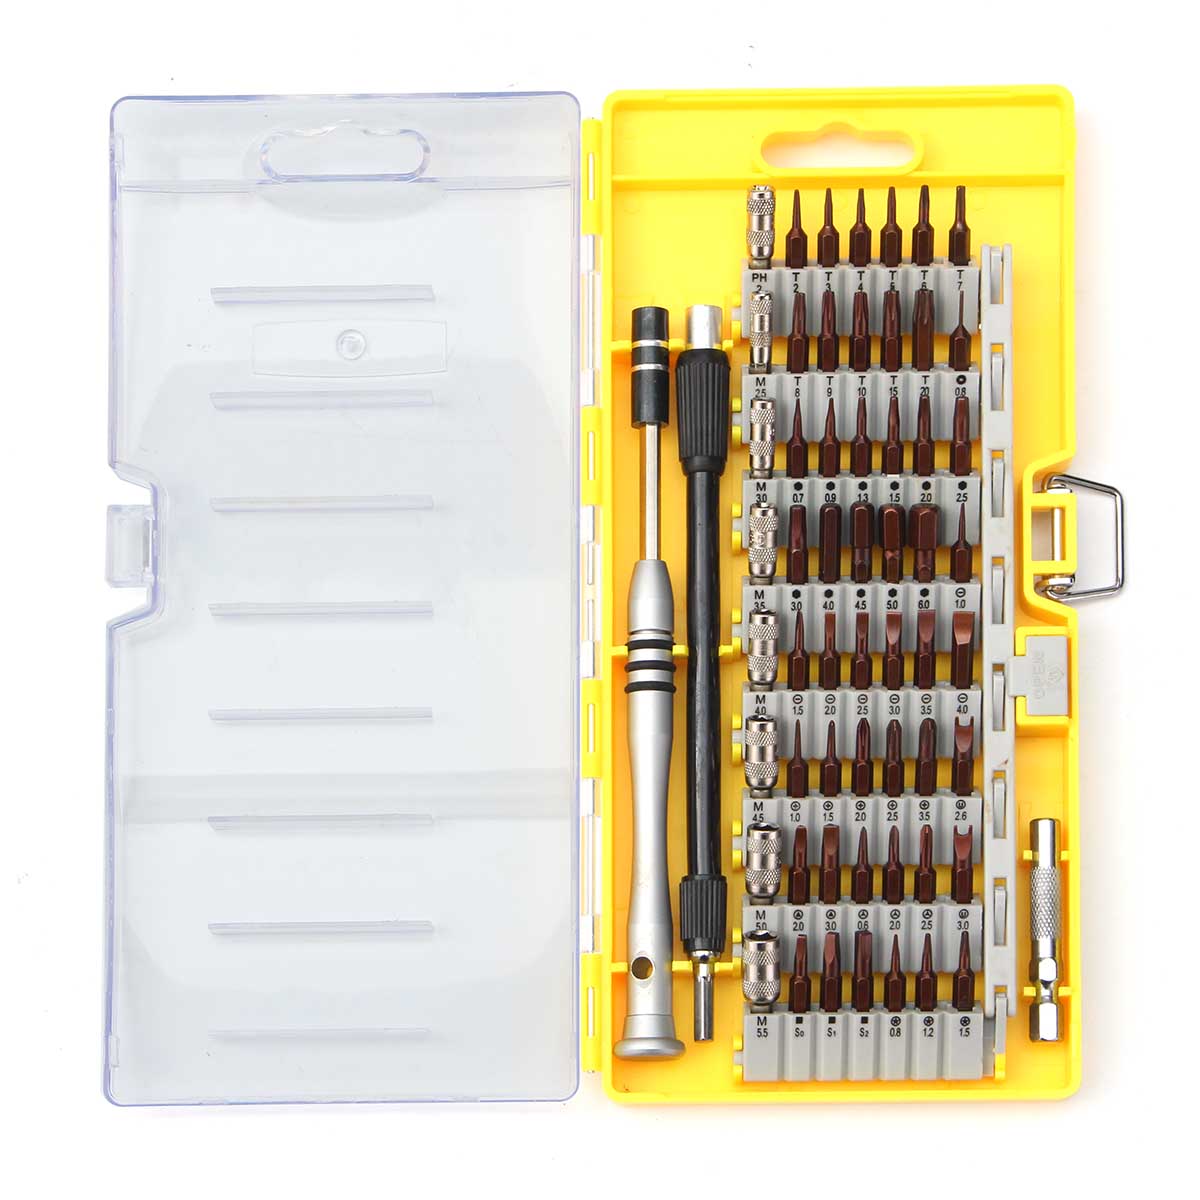 

60 in 1 Precision Screwdriver Magnetic Tool Compact Repair Maintenance Tools Kit w/ Case